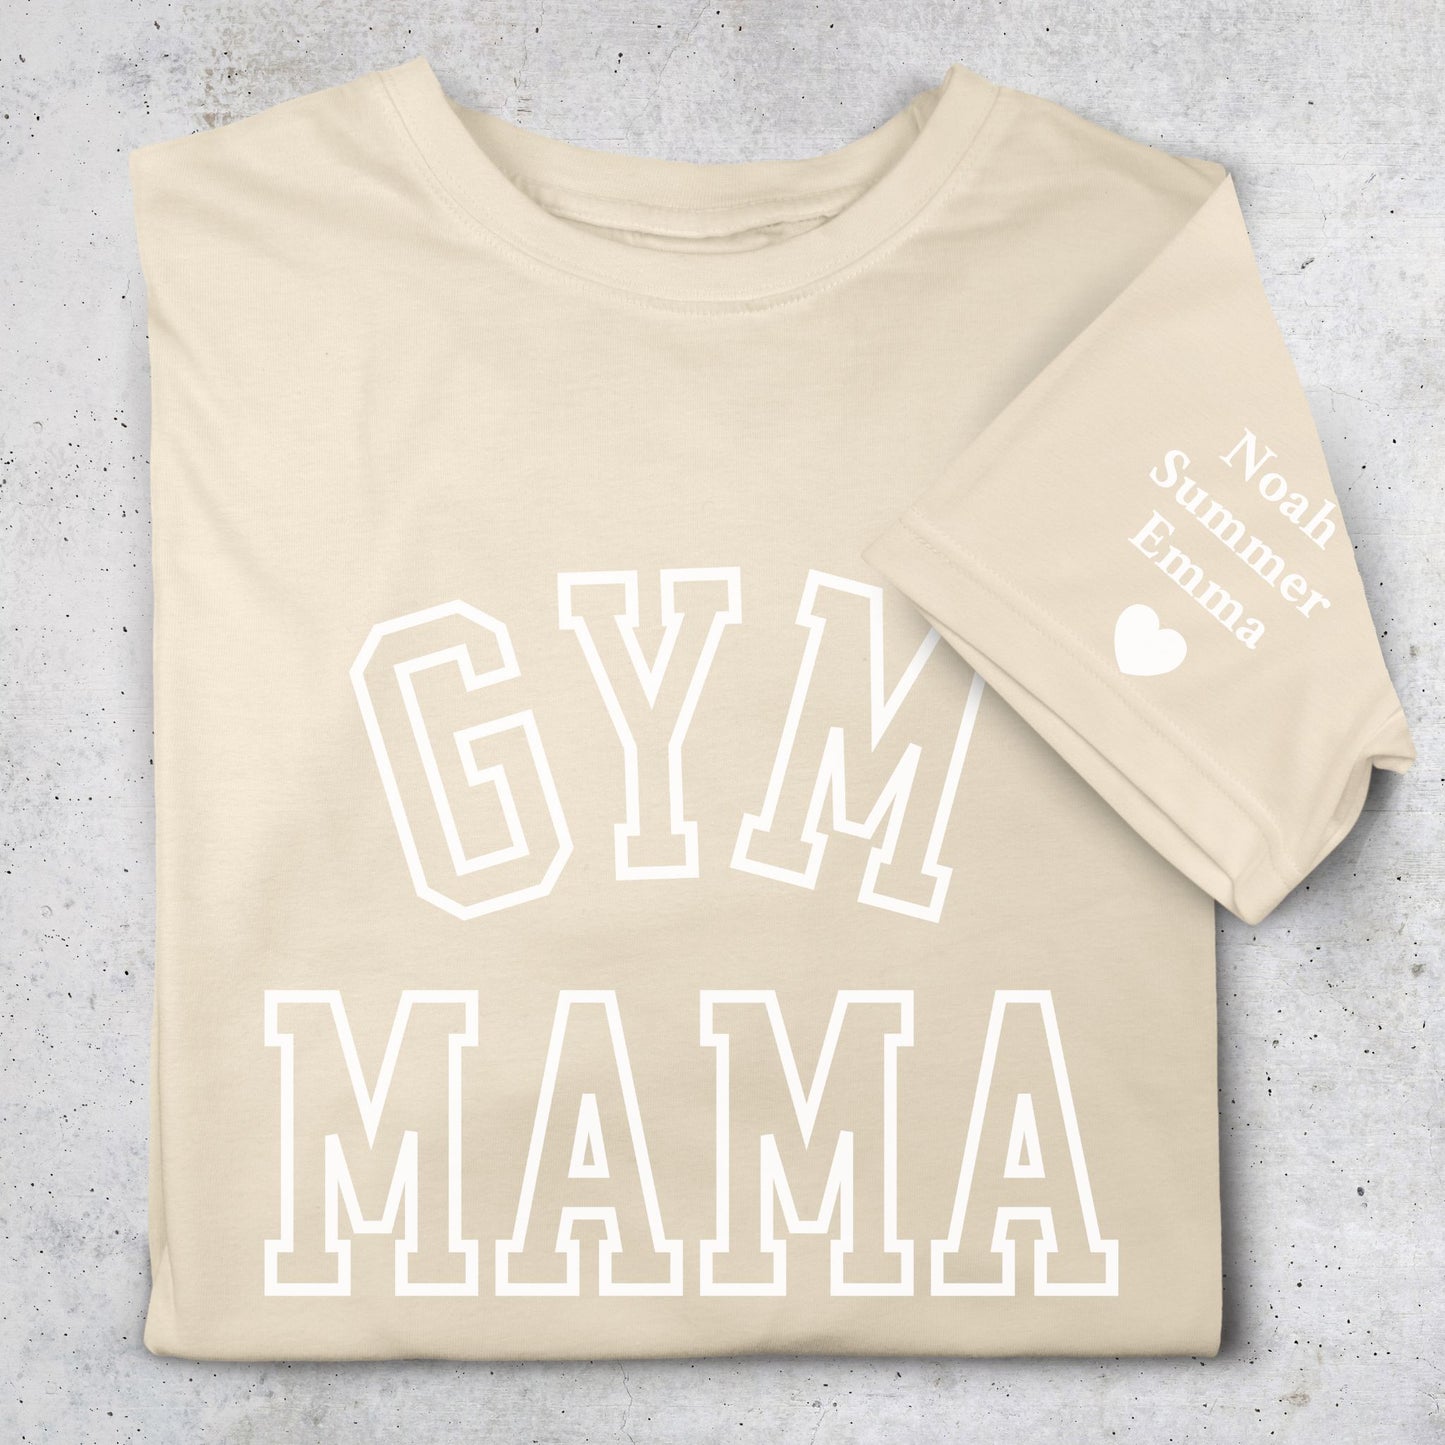 Personalized Gym Mama T-Shirt